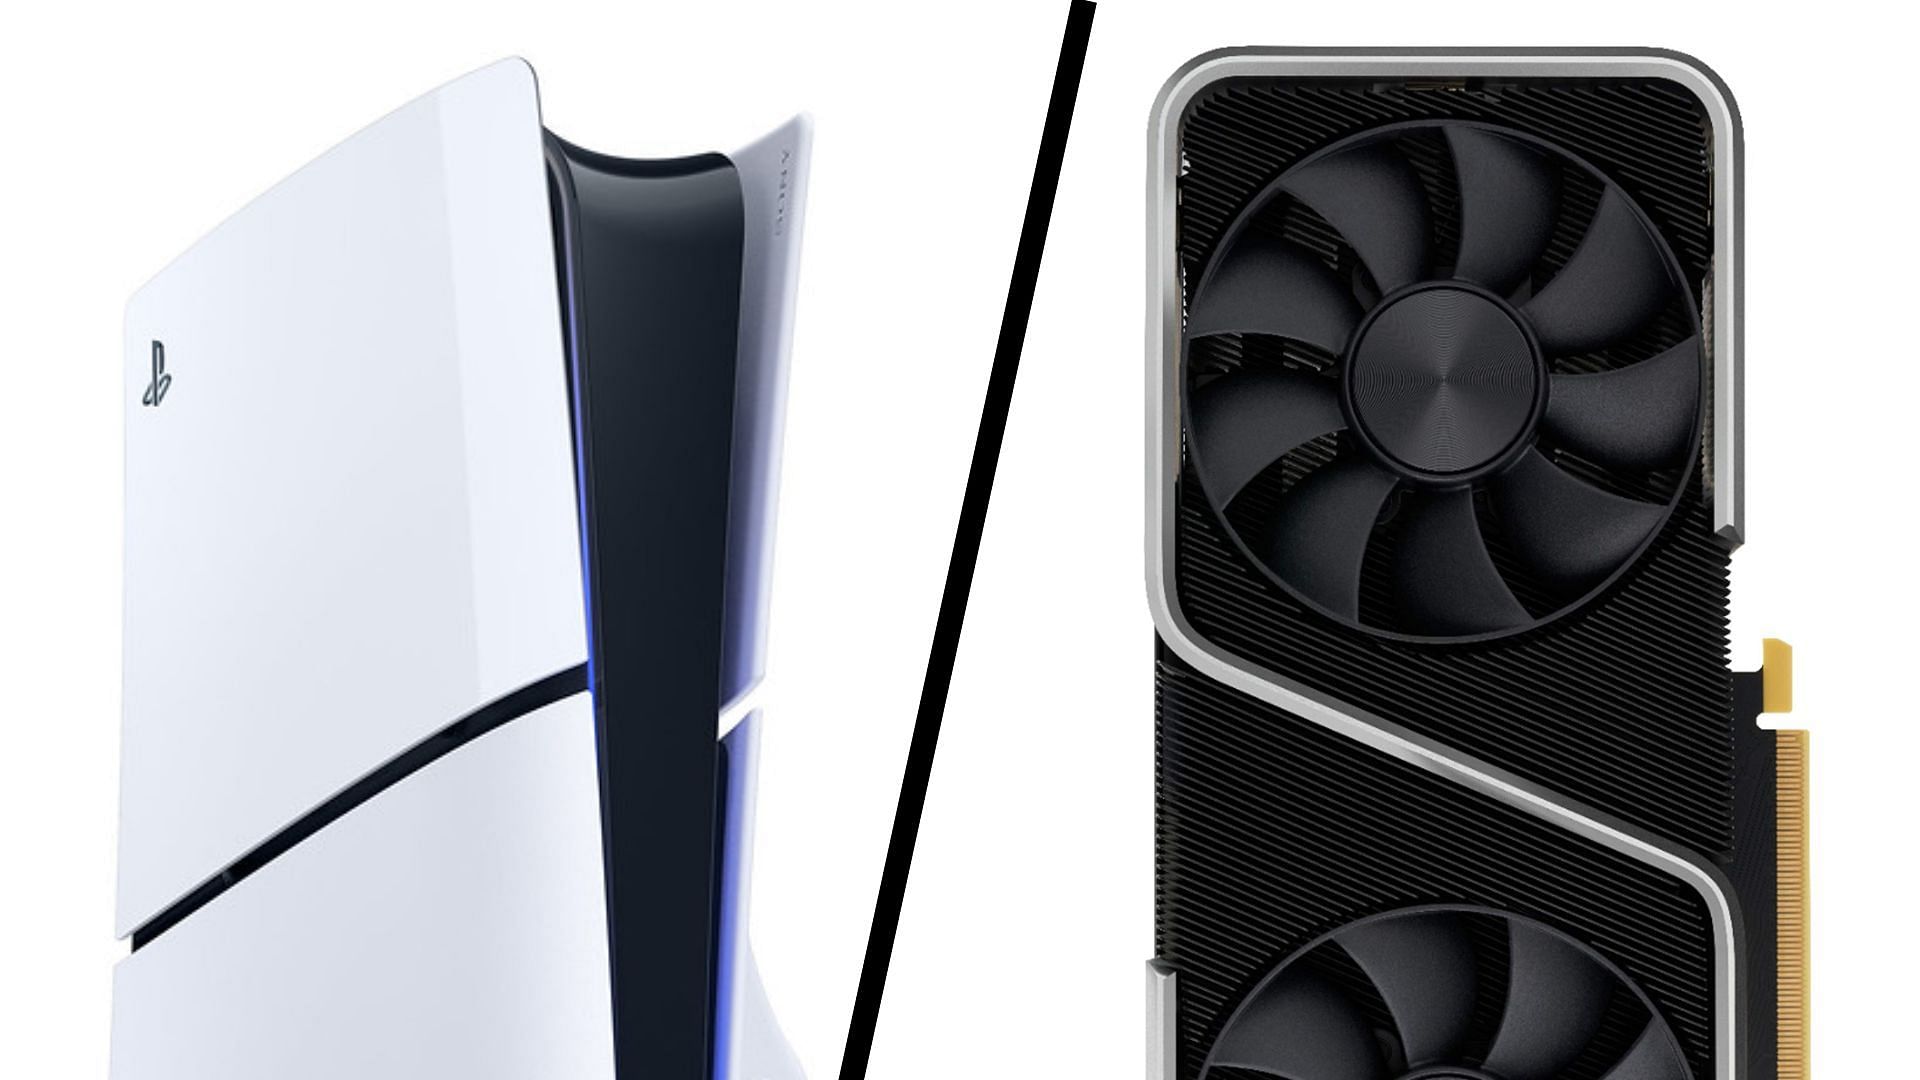 PS5 Slim vs RTX 3060: Which has a better GPU?